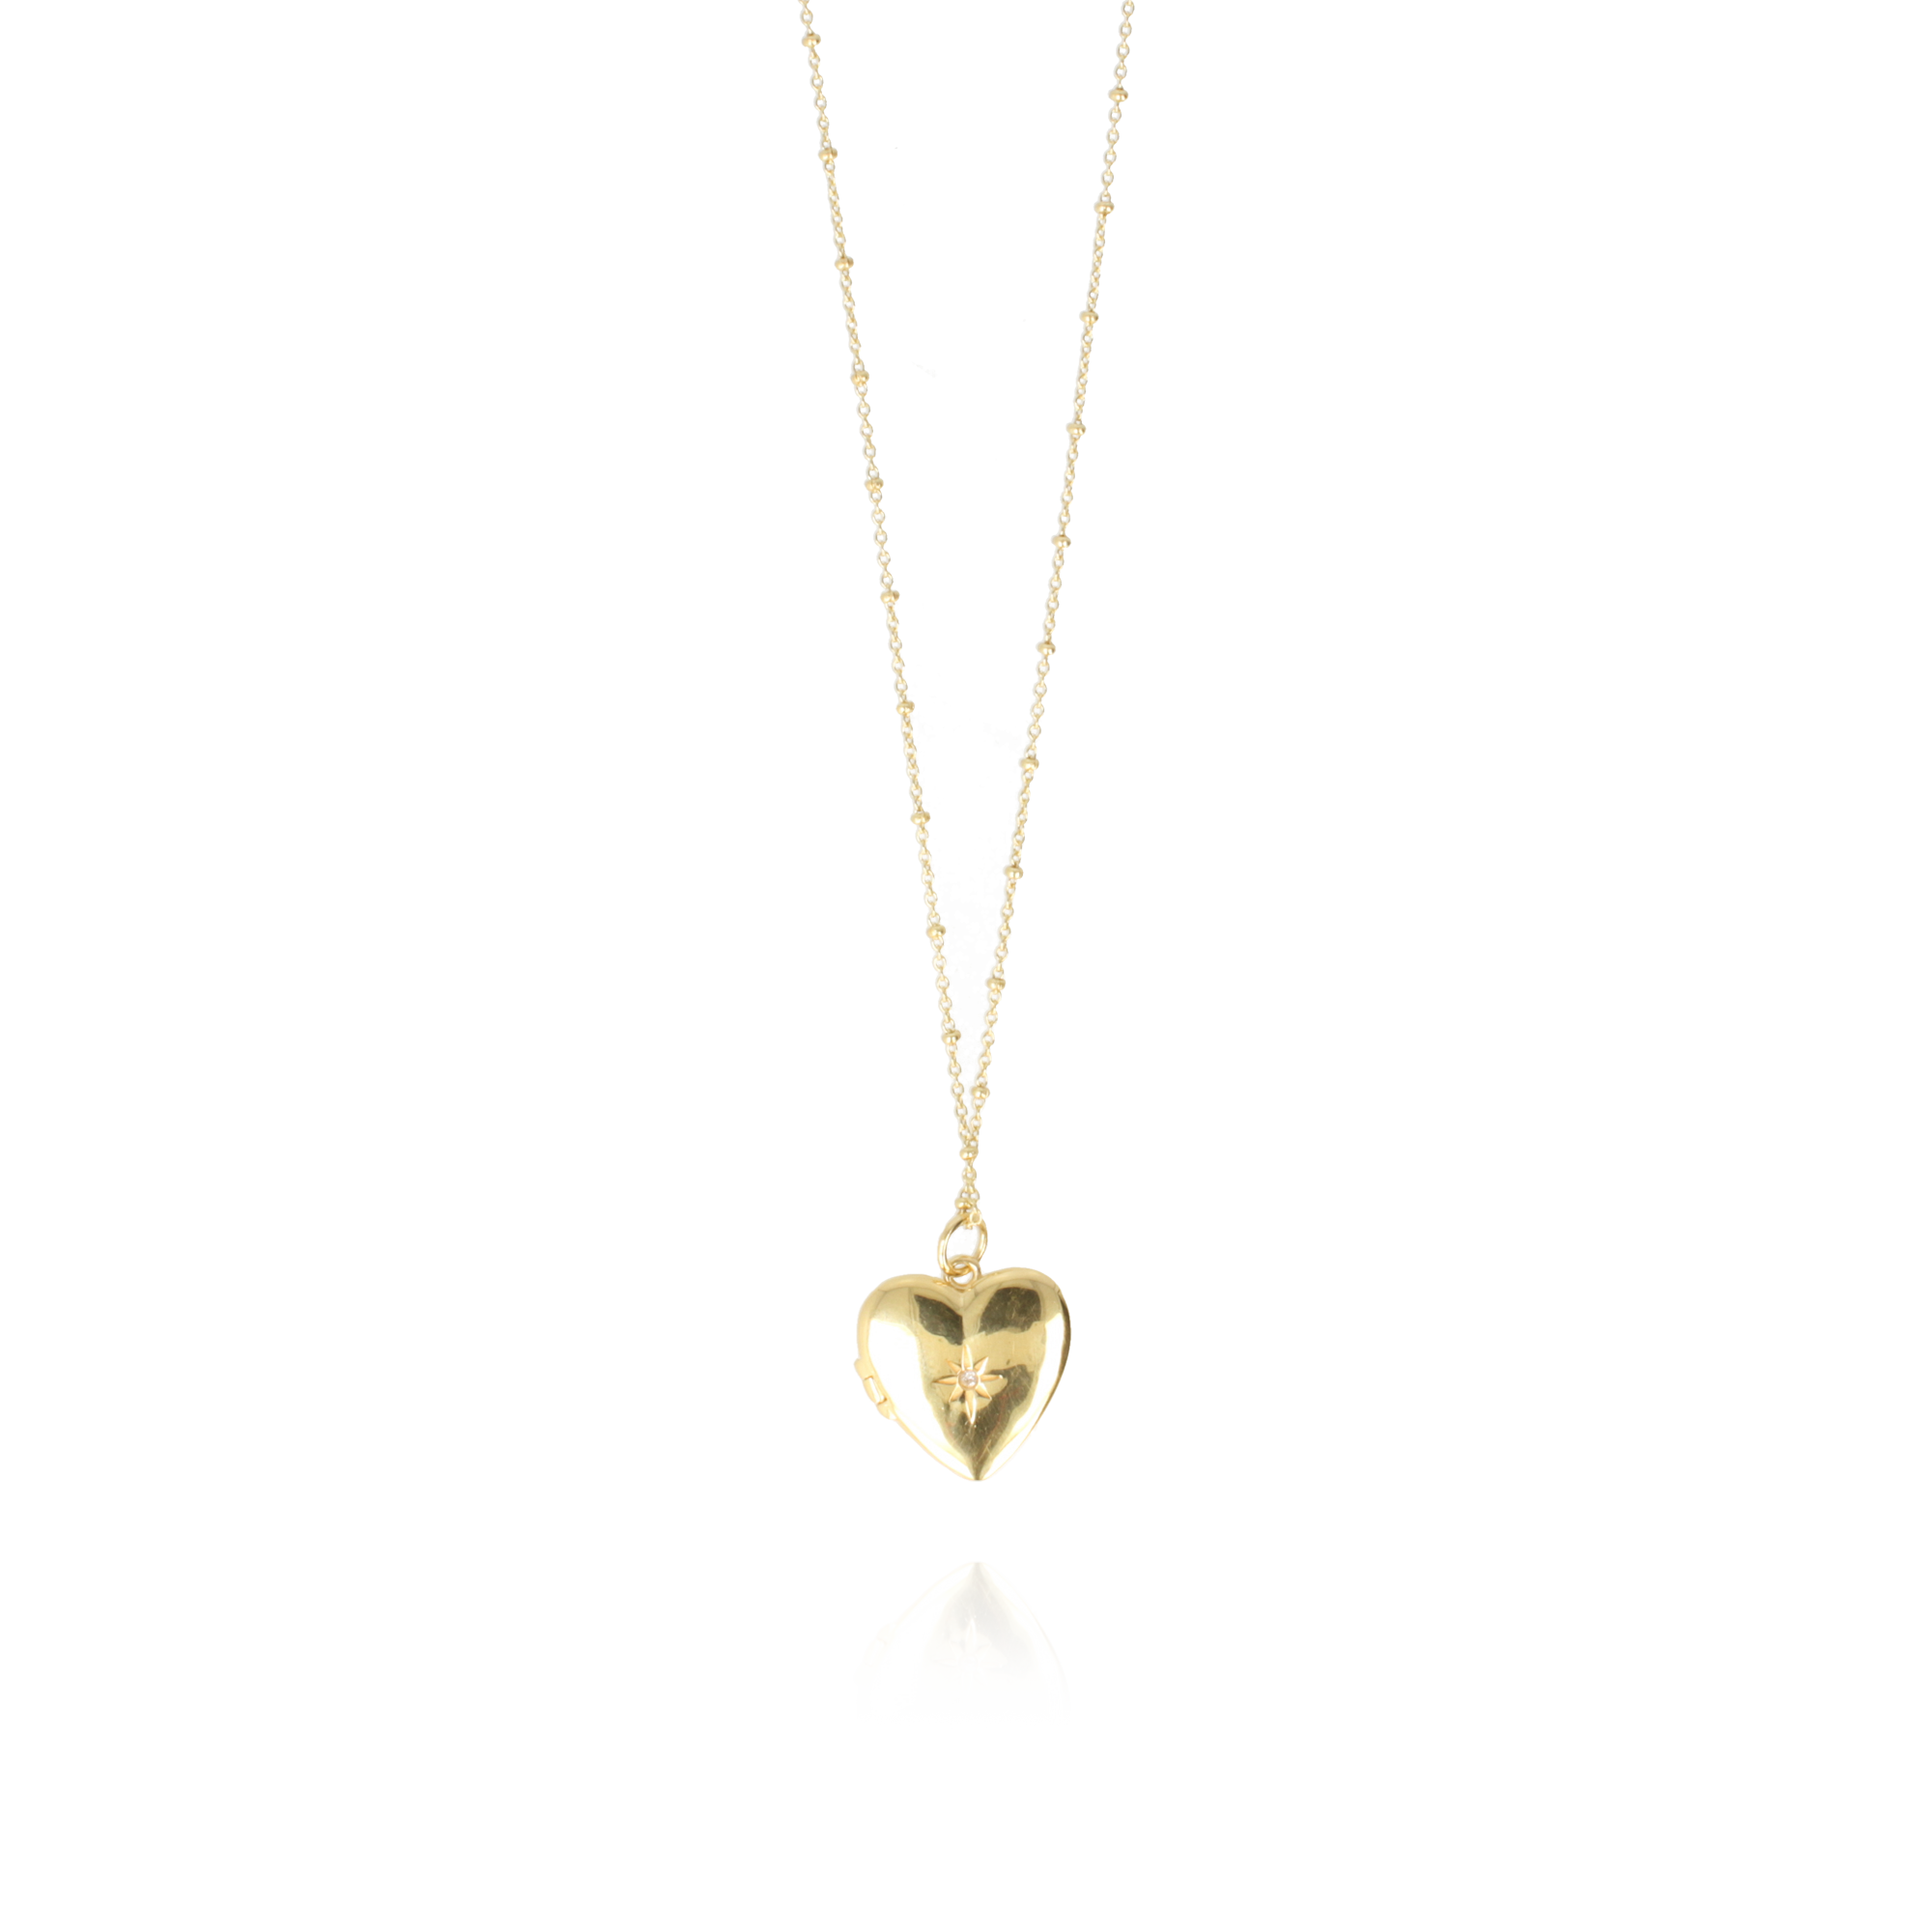 Classic Necklace Heart Pendant Slott-theme.productDescriptionPage.SEO.byTheBrand